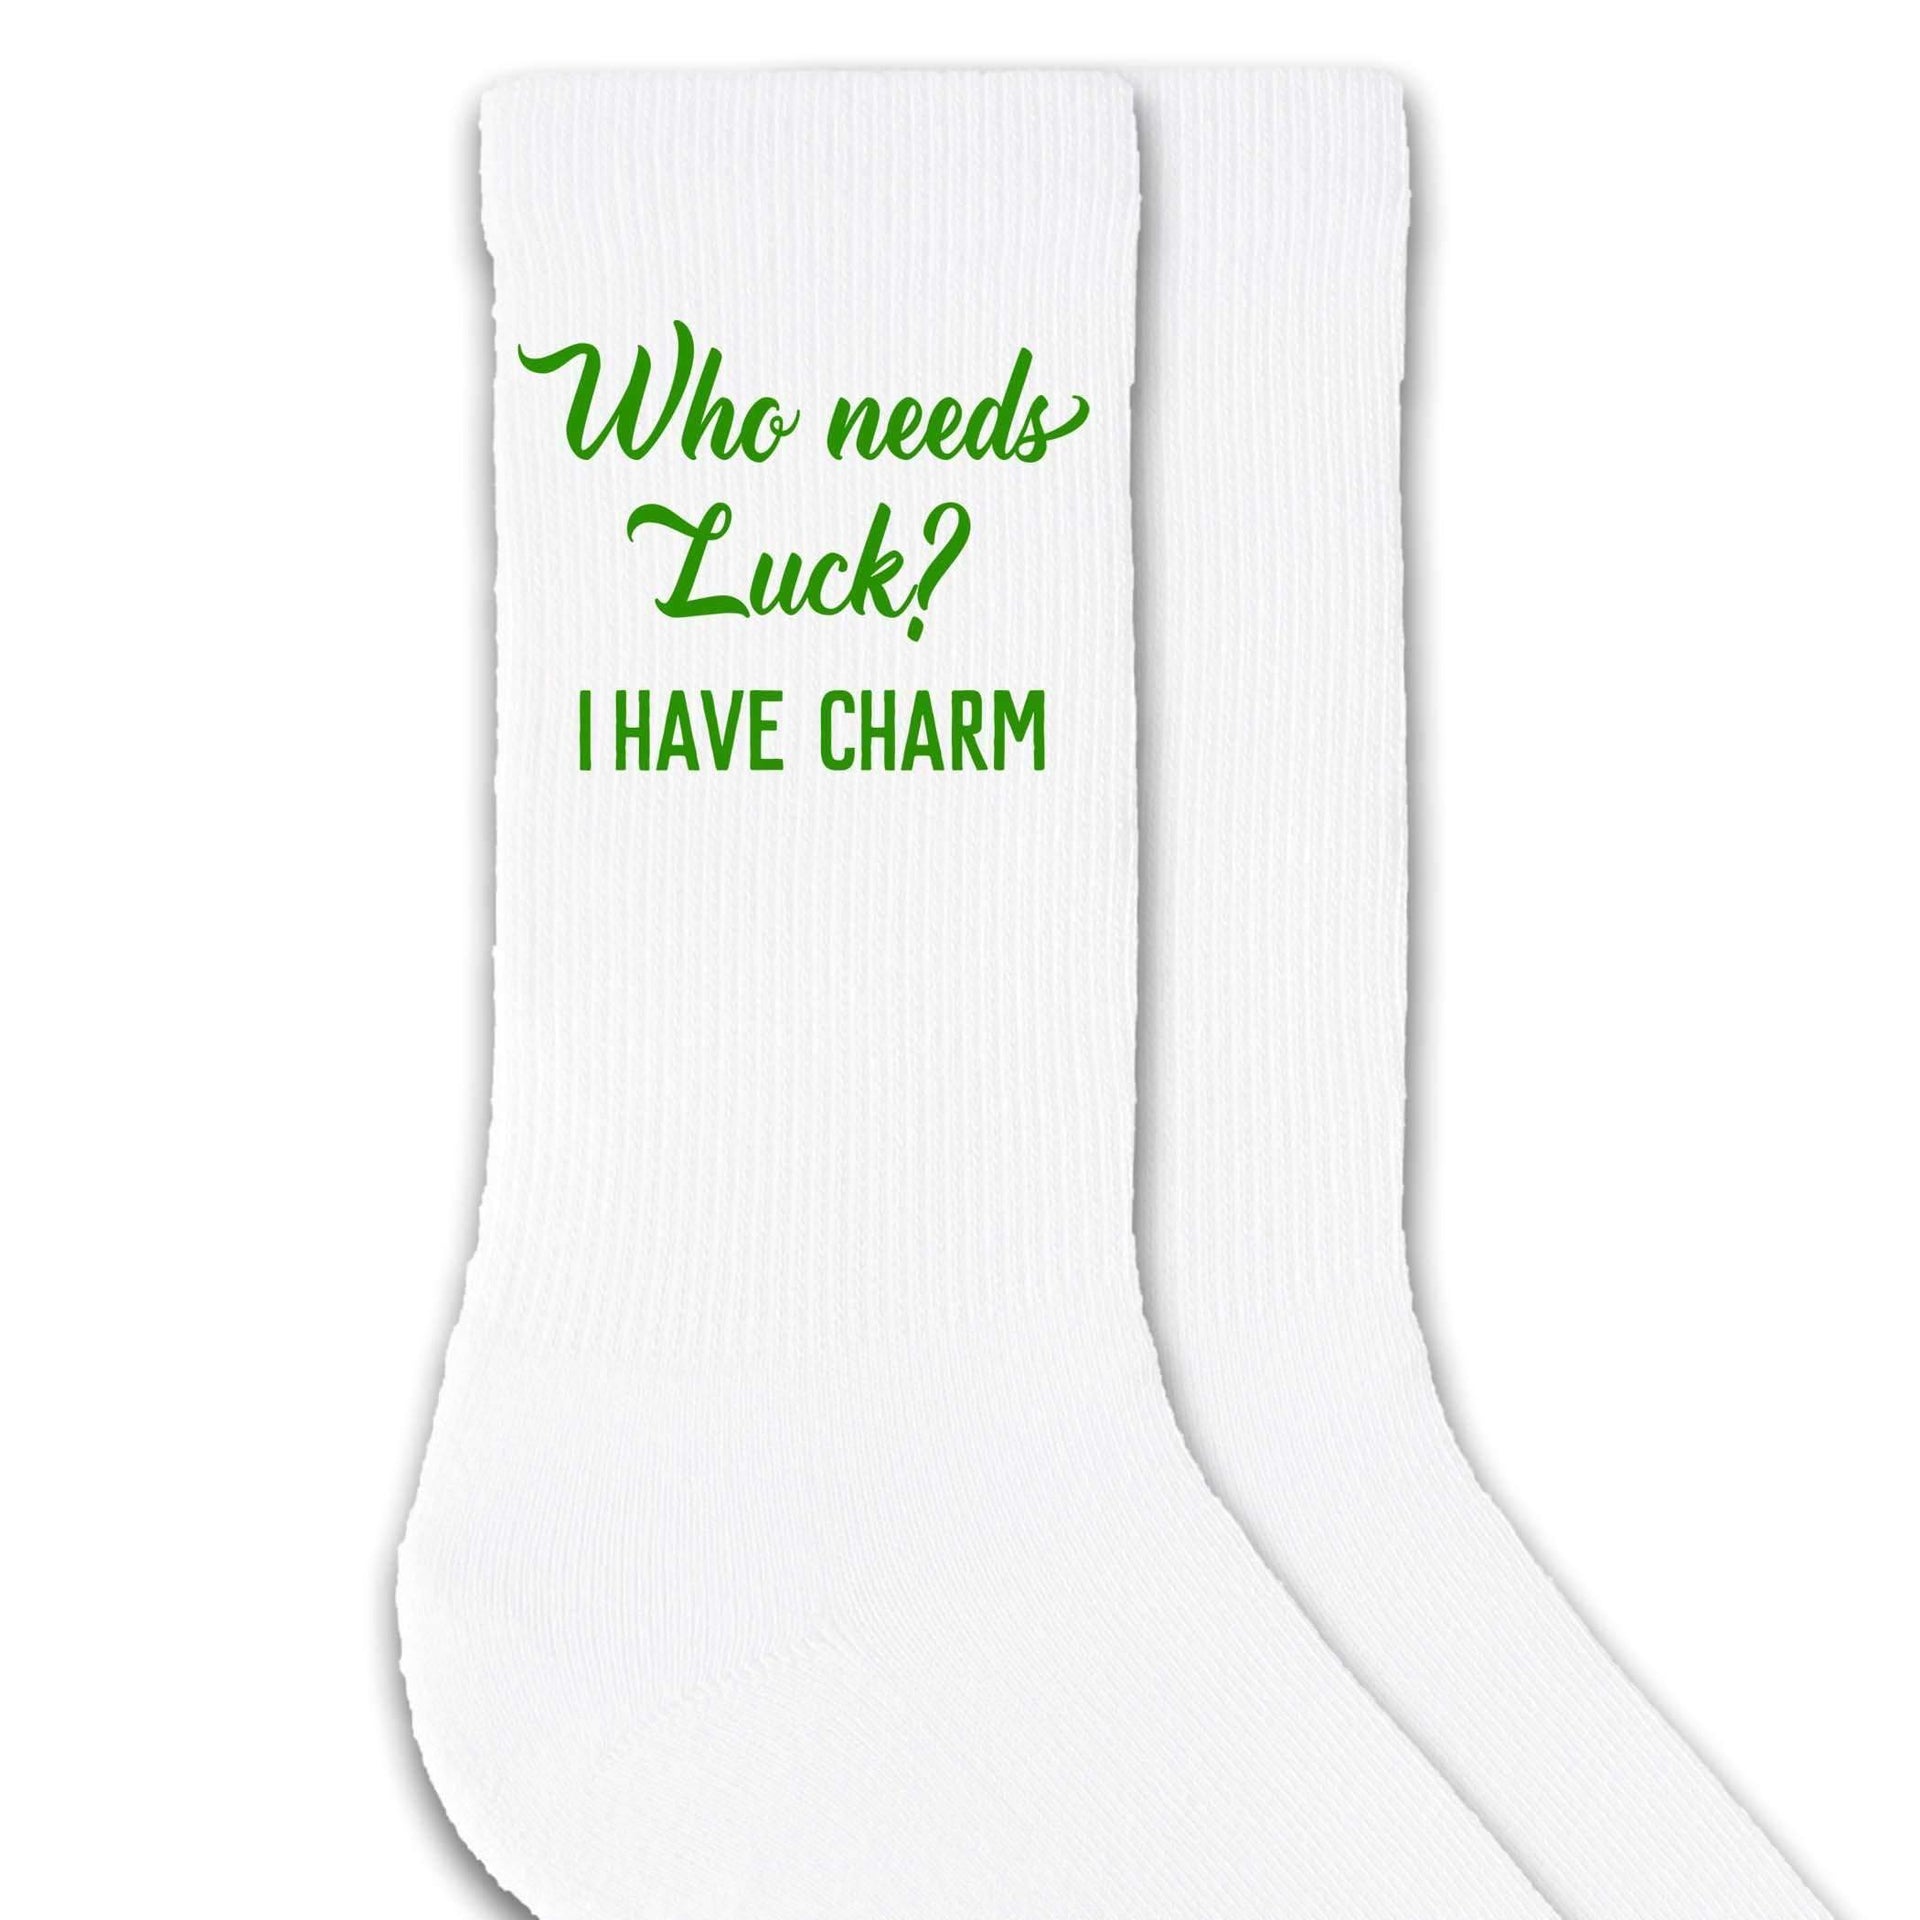 Who needs luck? I have charm digitally printed on crew socks.